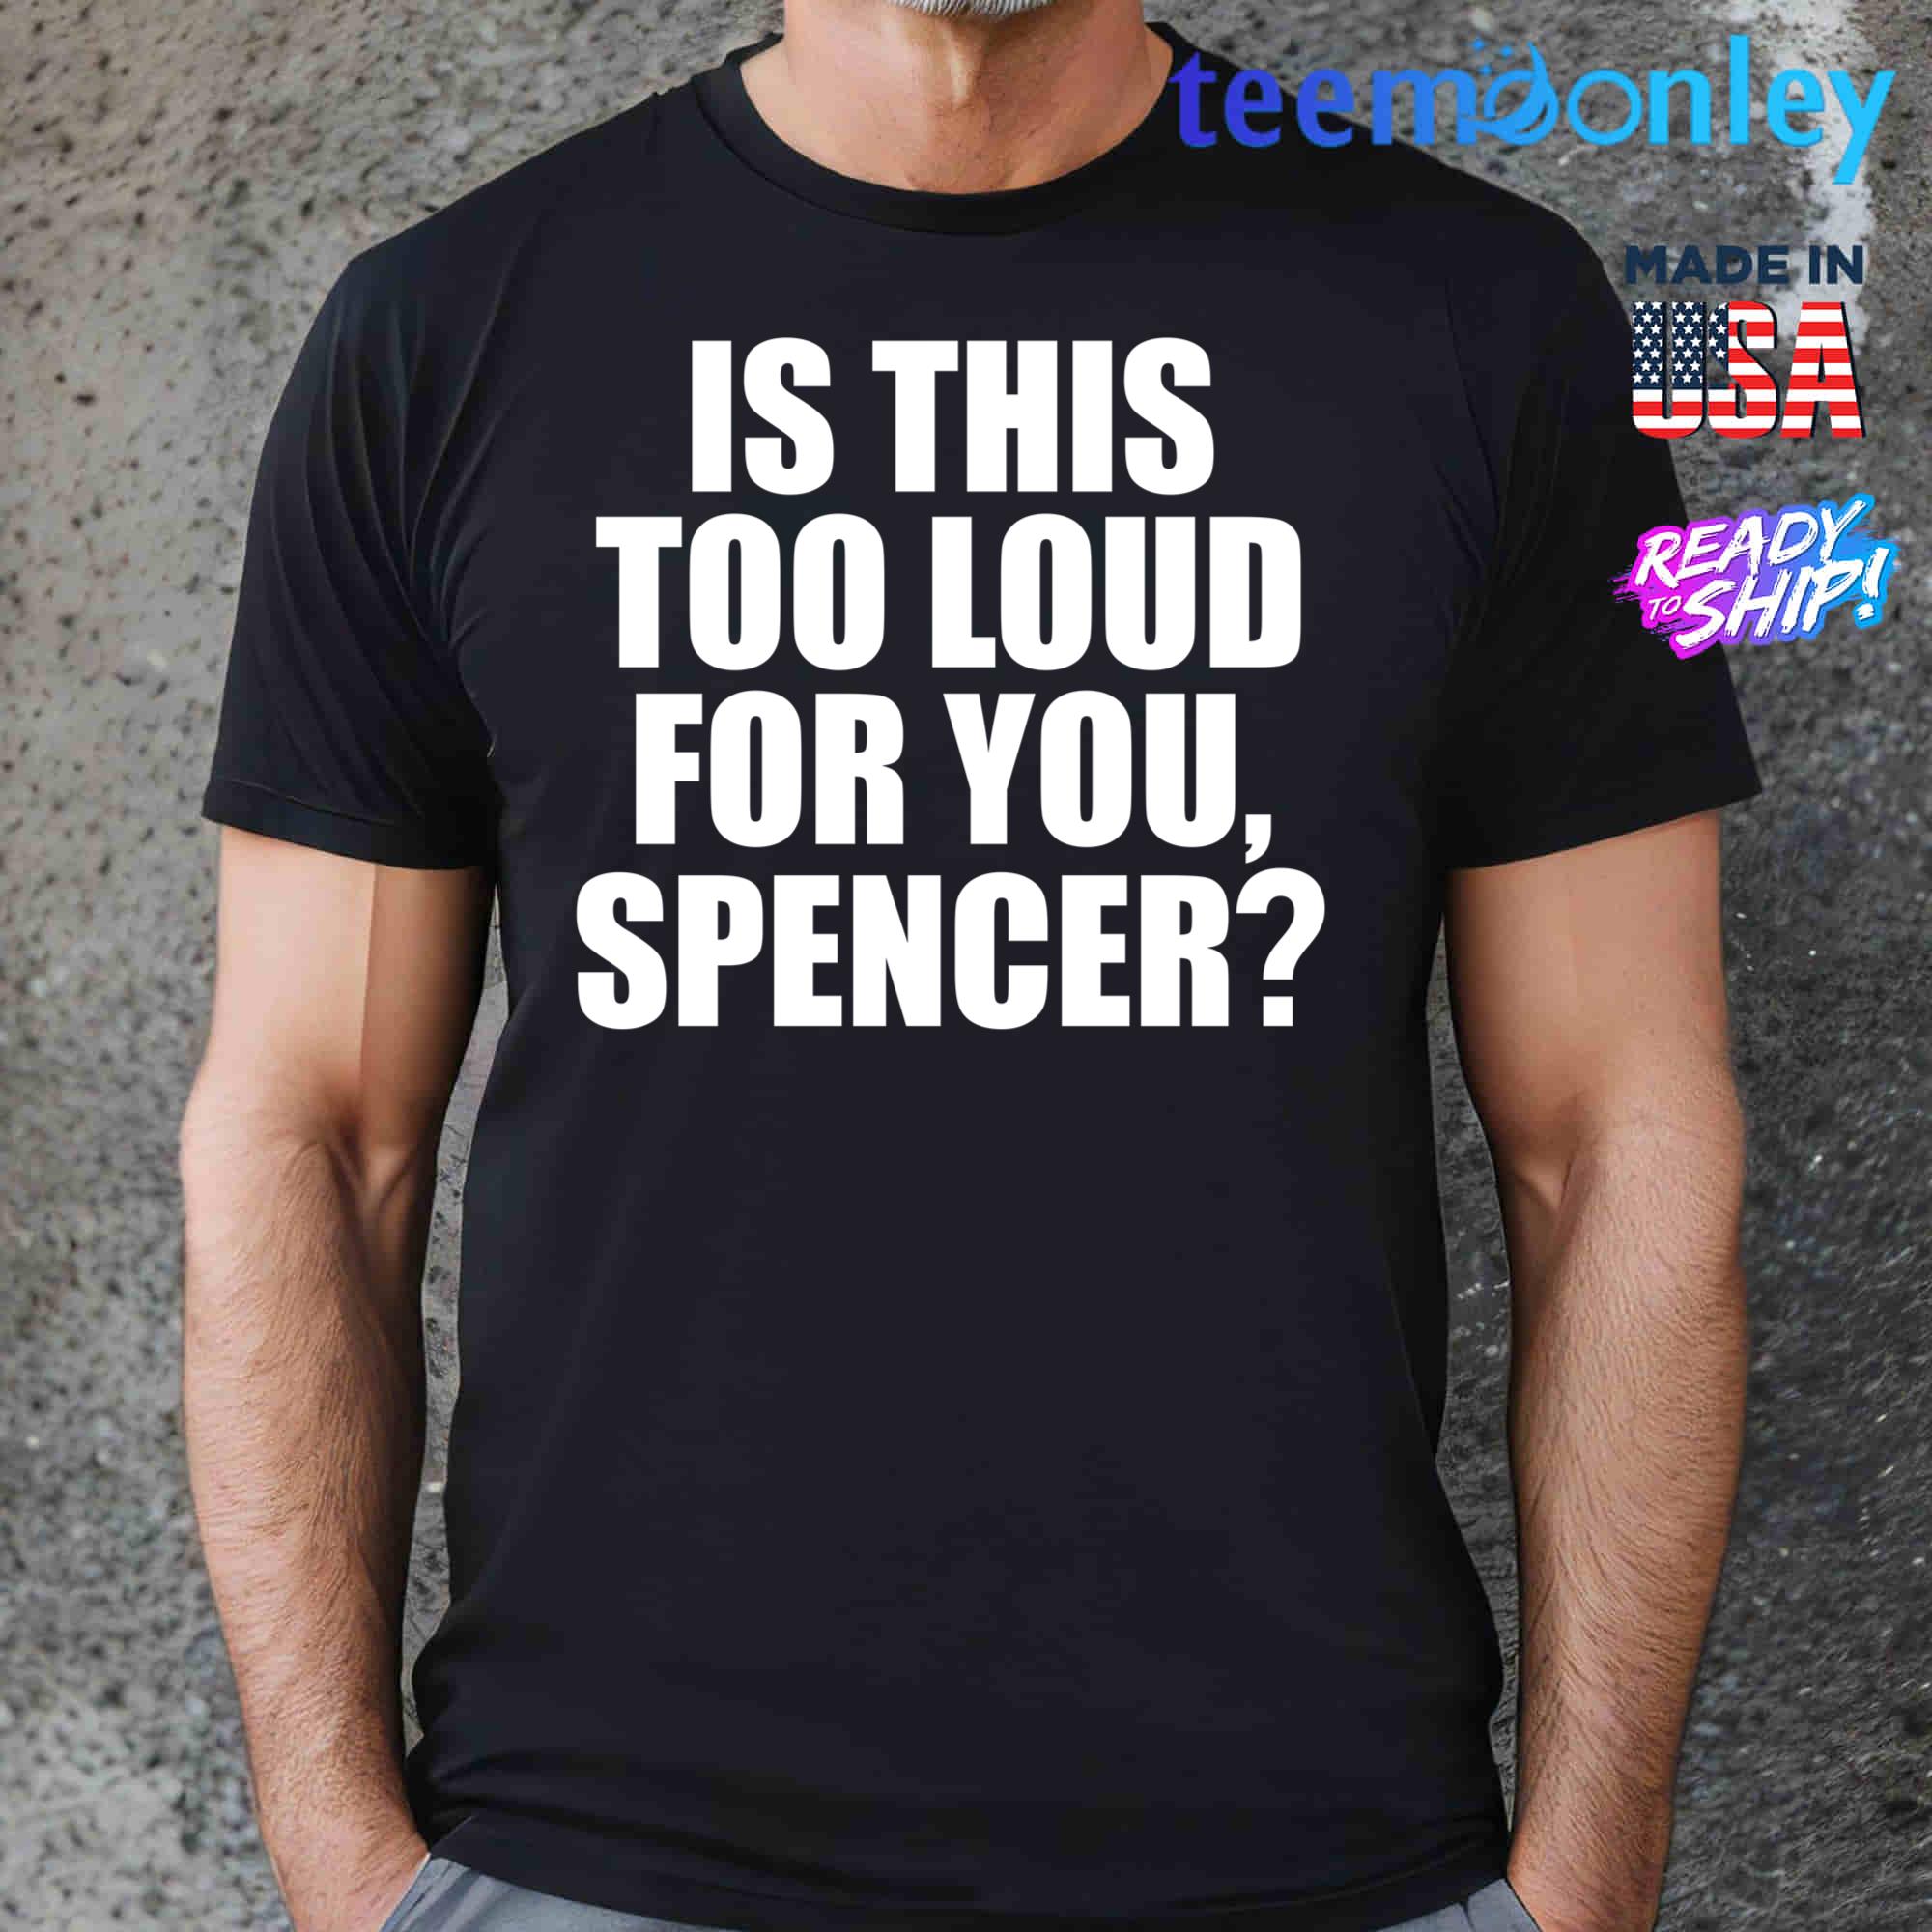 Spencer's, Shirts